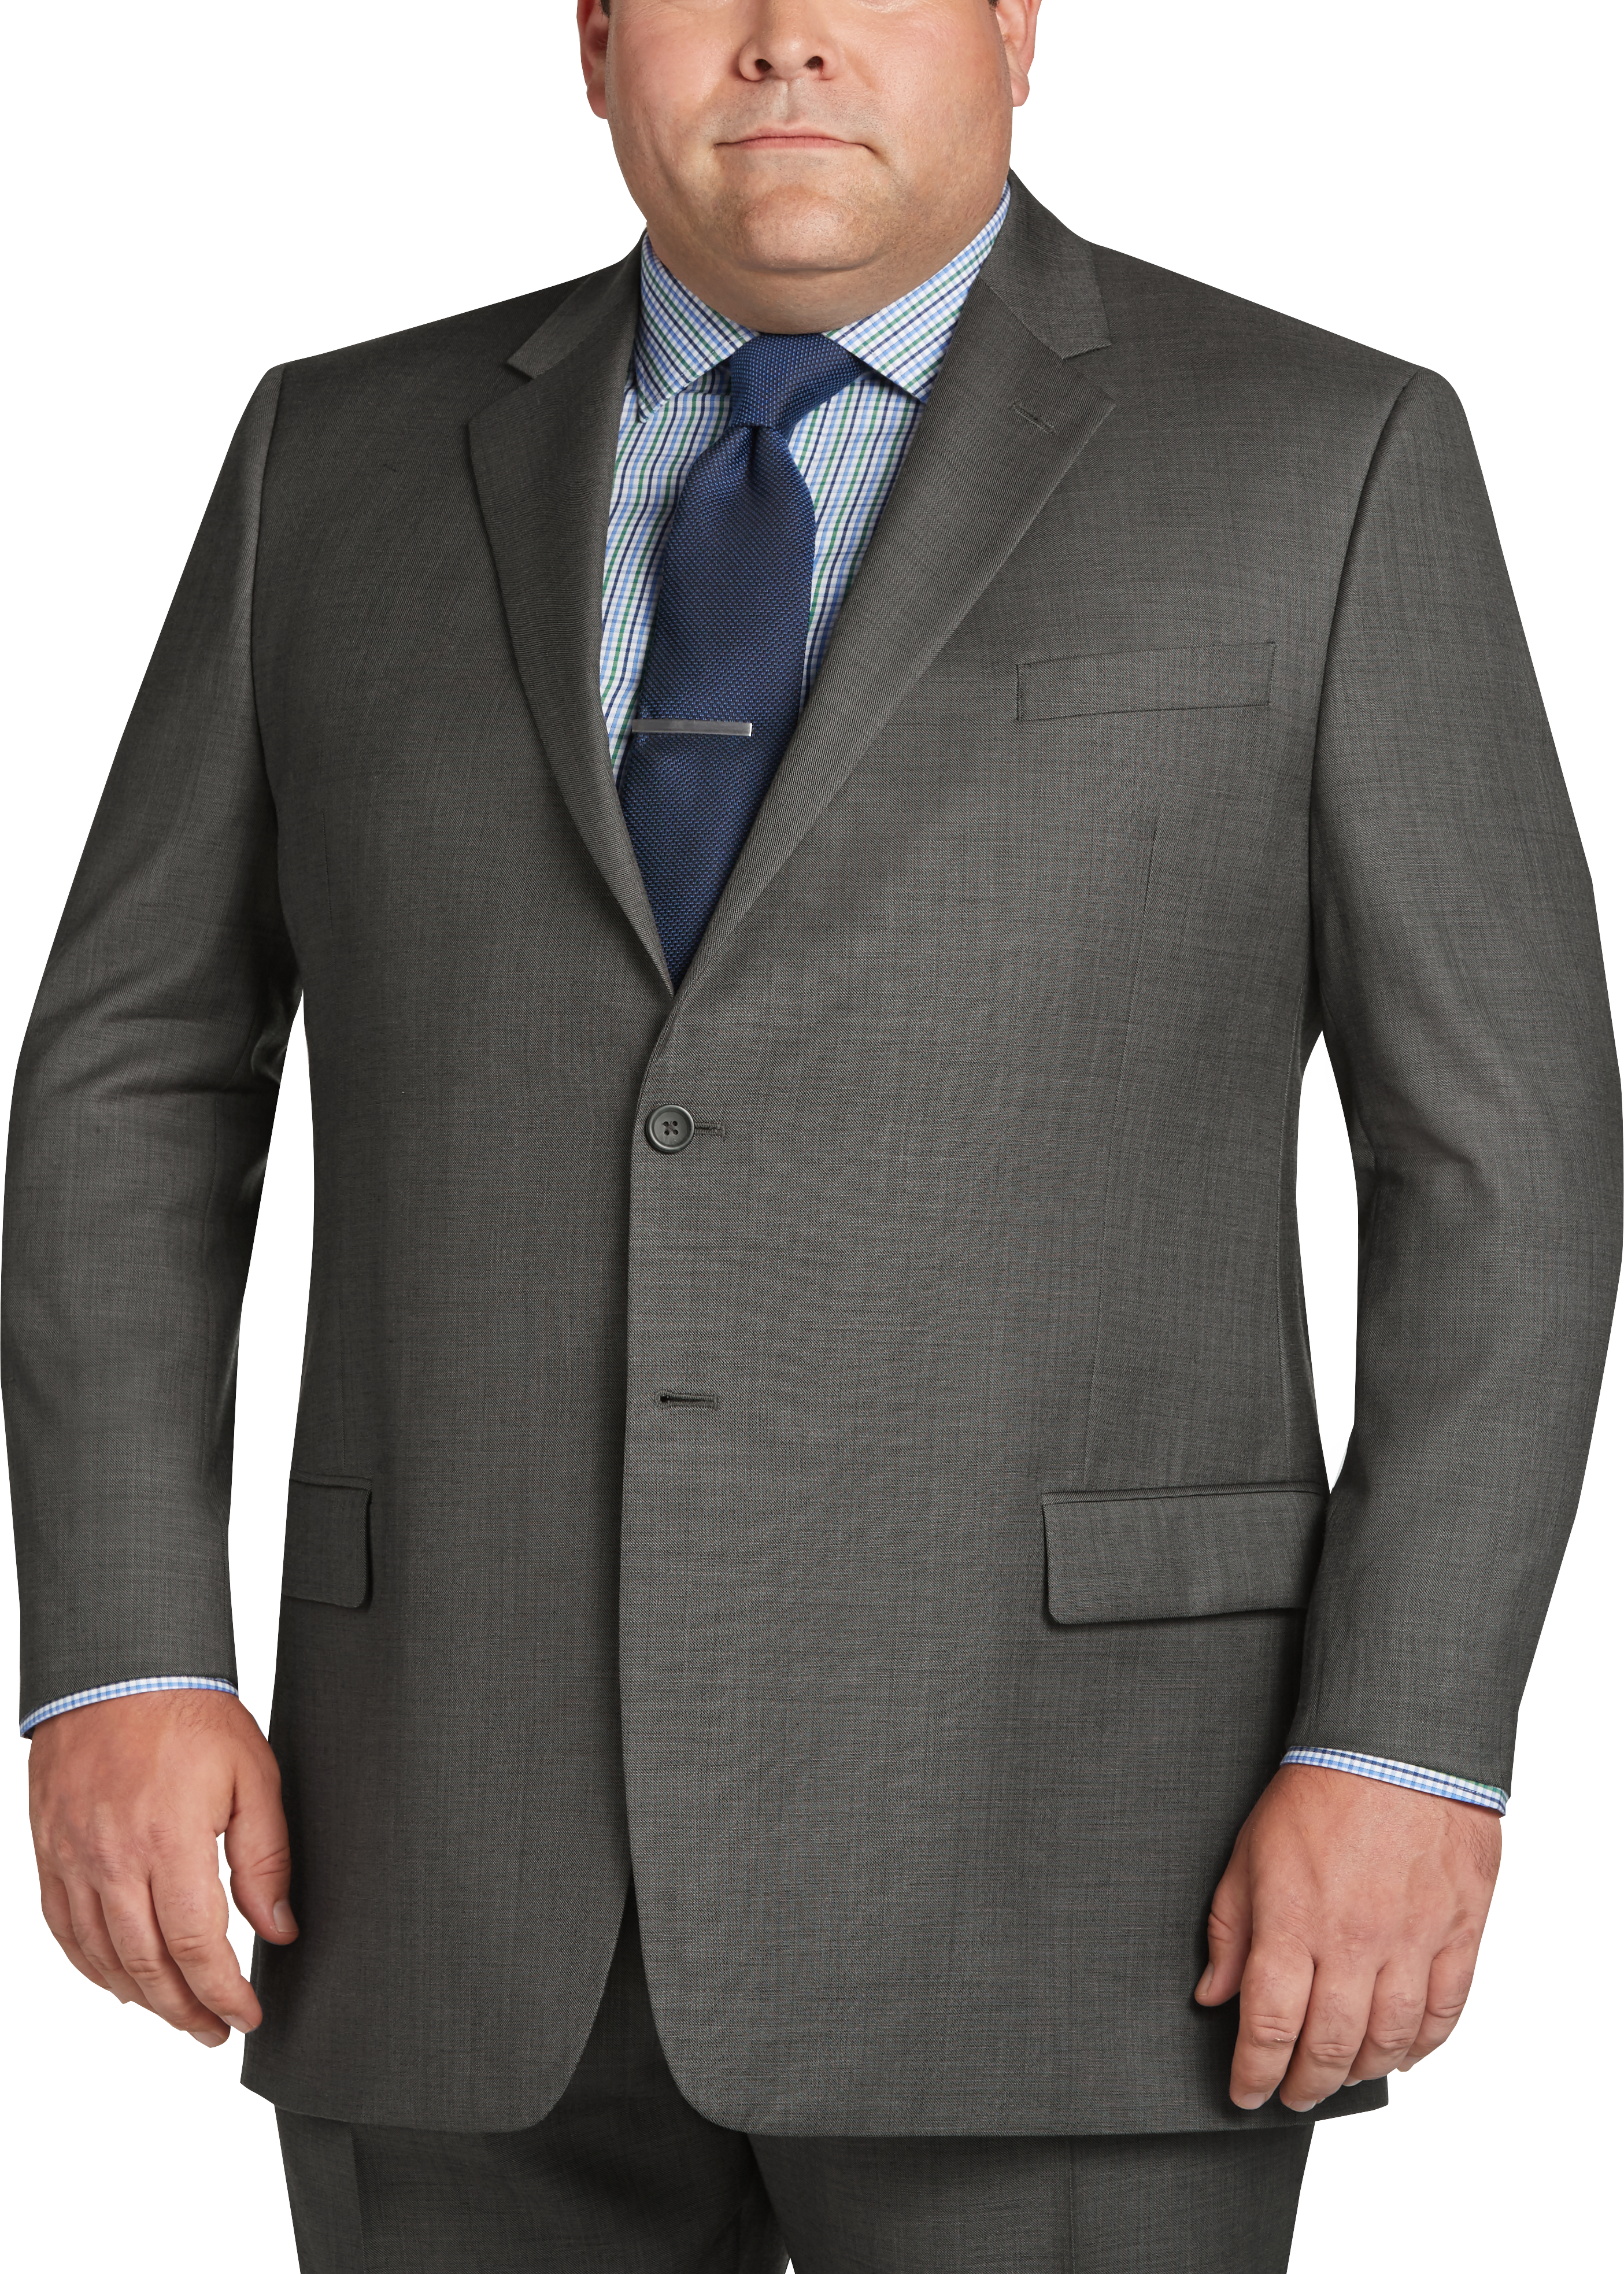 Pronto Uomo Gray Sharkskin Suit, Portly - Men's Portly | Men's Wearhouse